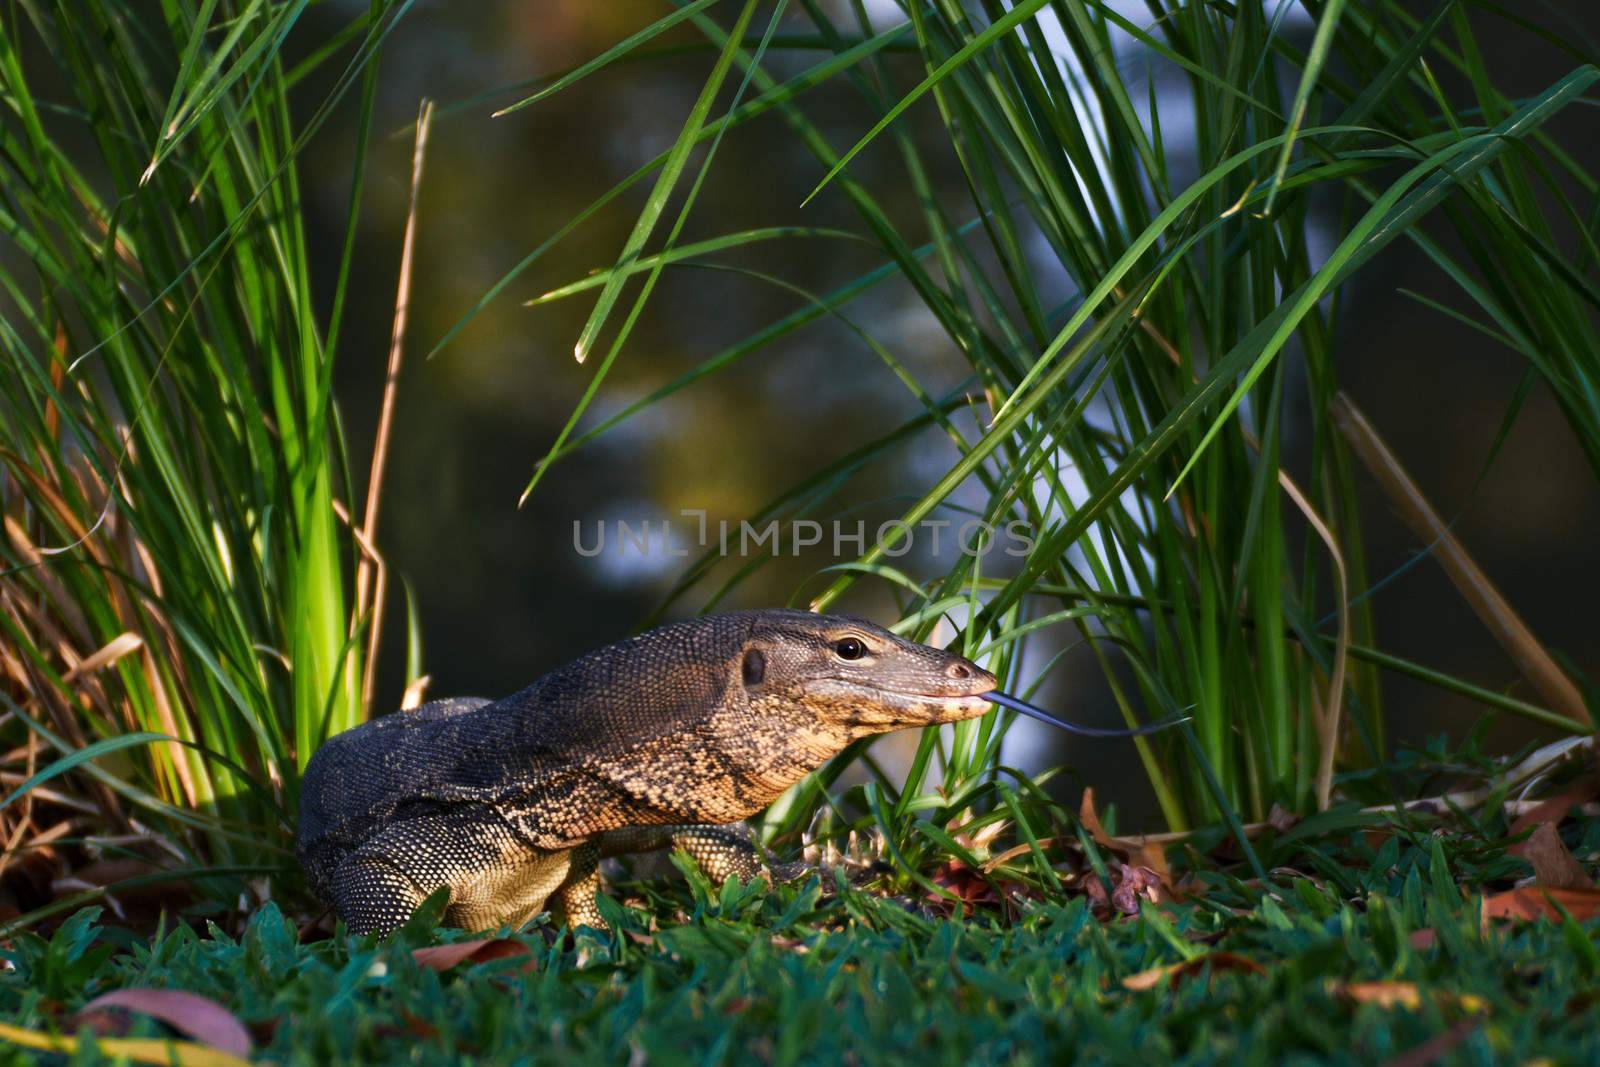 Giant Monitor Lizard in the city garden